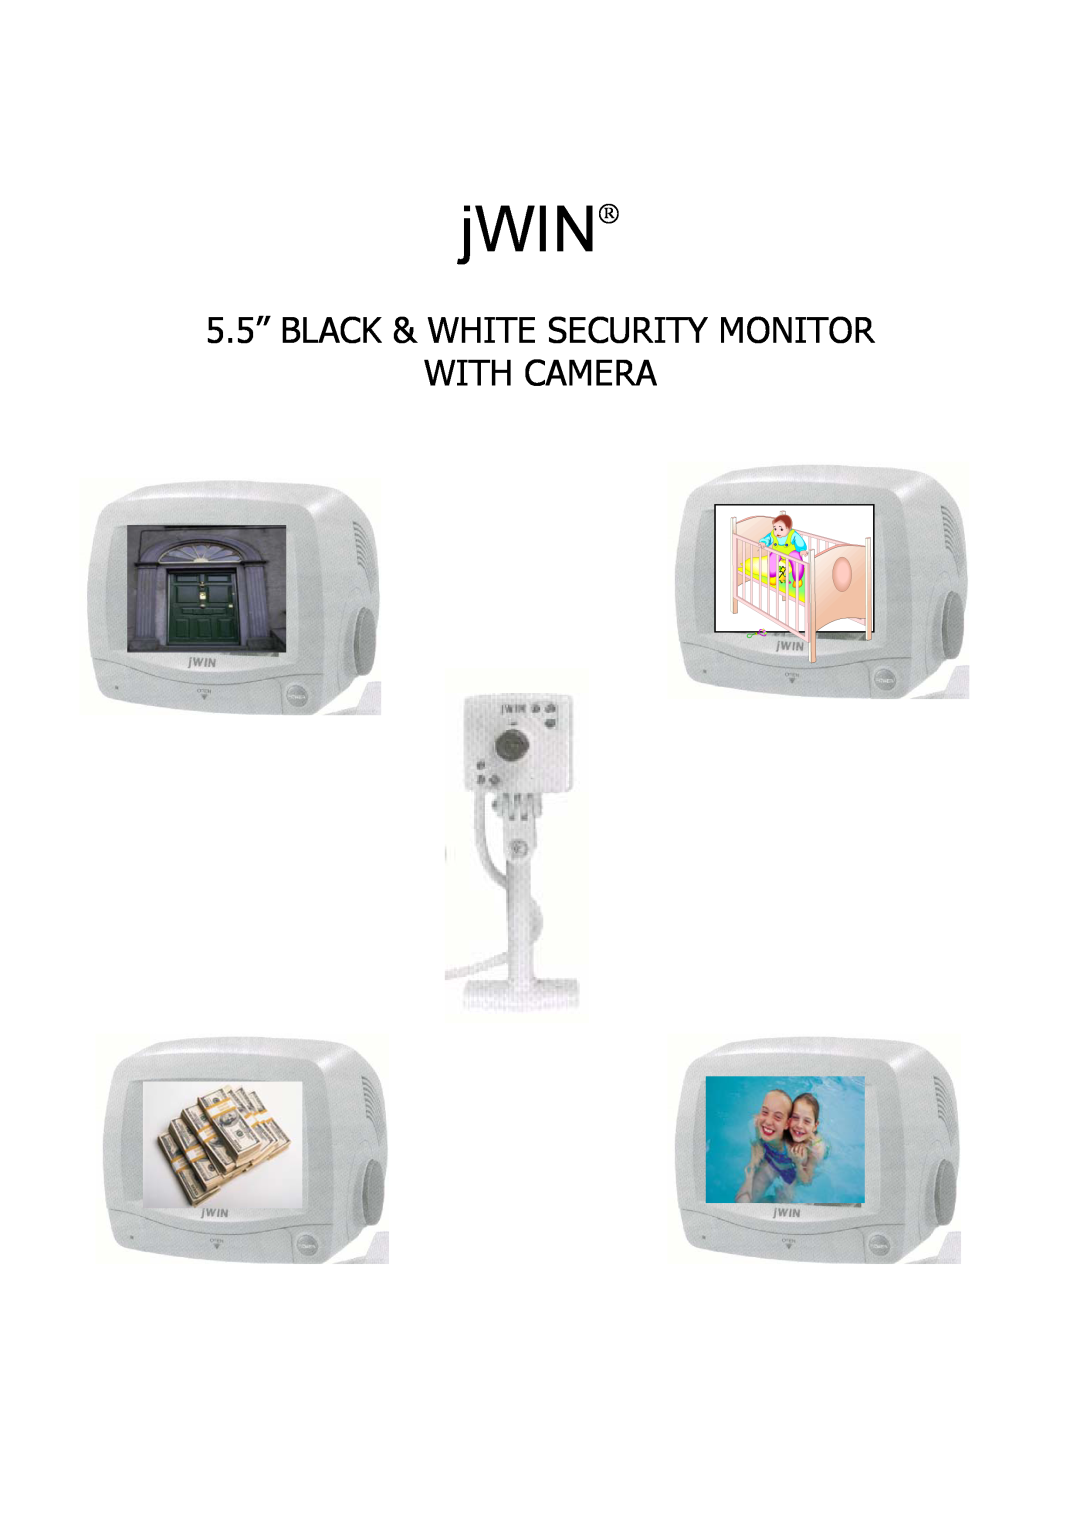 Jwin JV-TV2040 manual jWIN, 5.5” BLACK & WHITE SECURITY MONITOR WITH CAMERA 